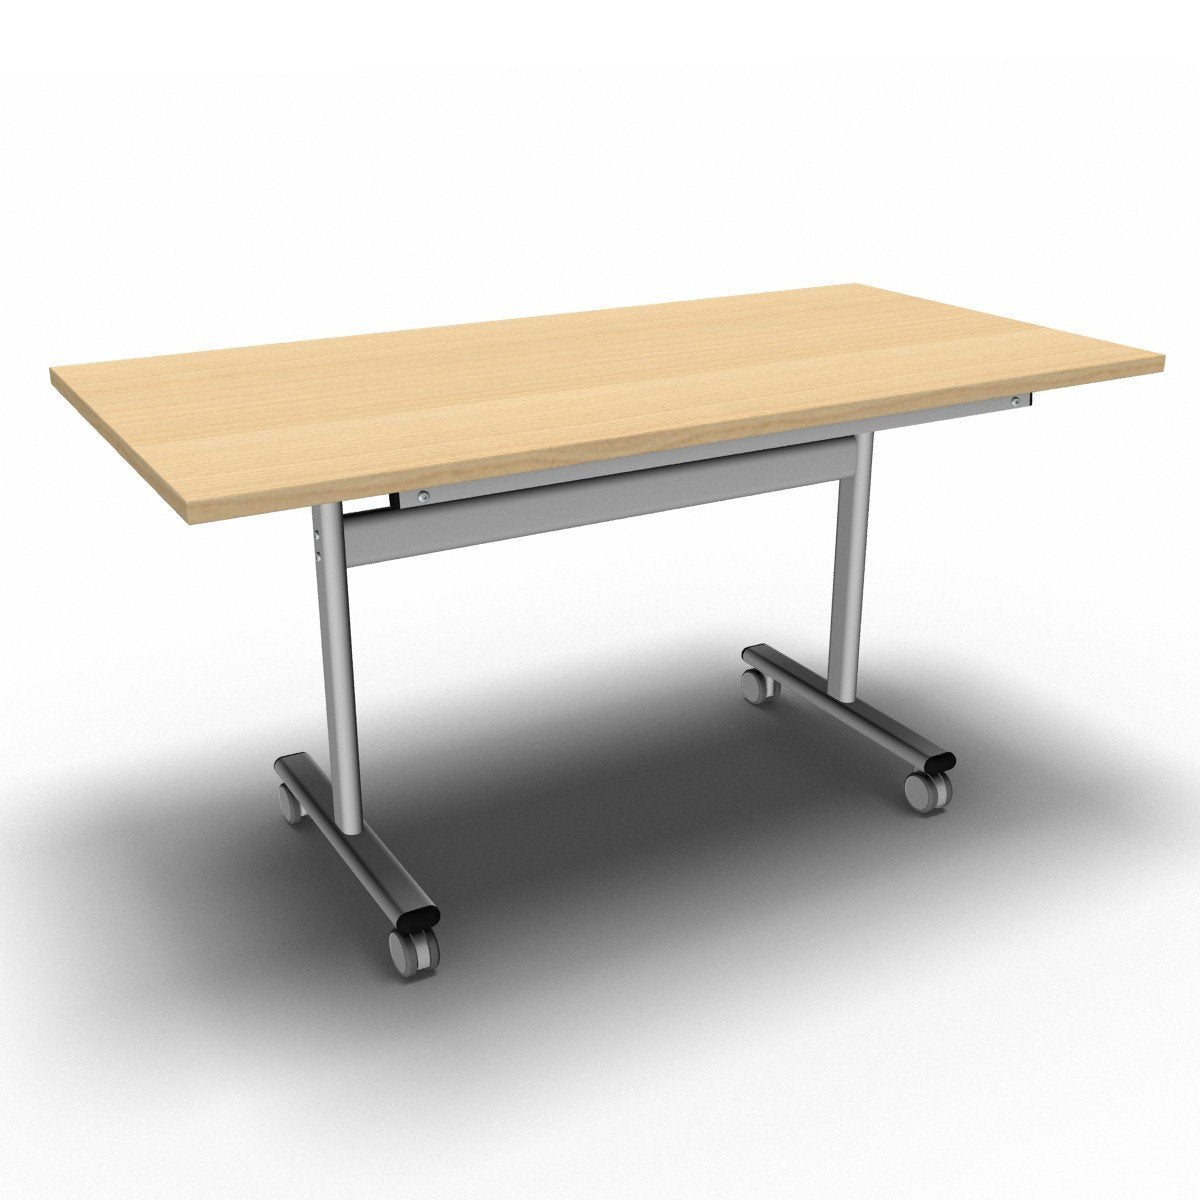 Table 1400 x 700 x 720mm / Rectangular / Maple Synergy Flip Top Tables